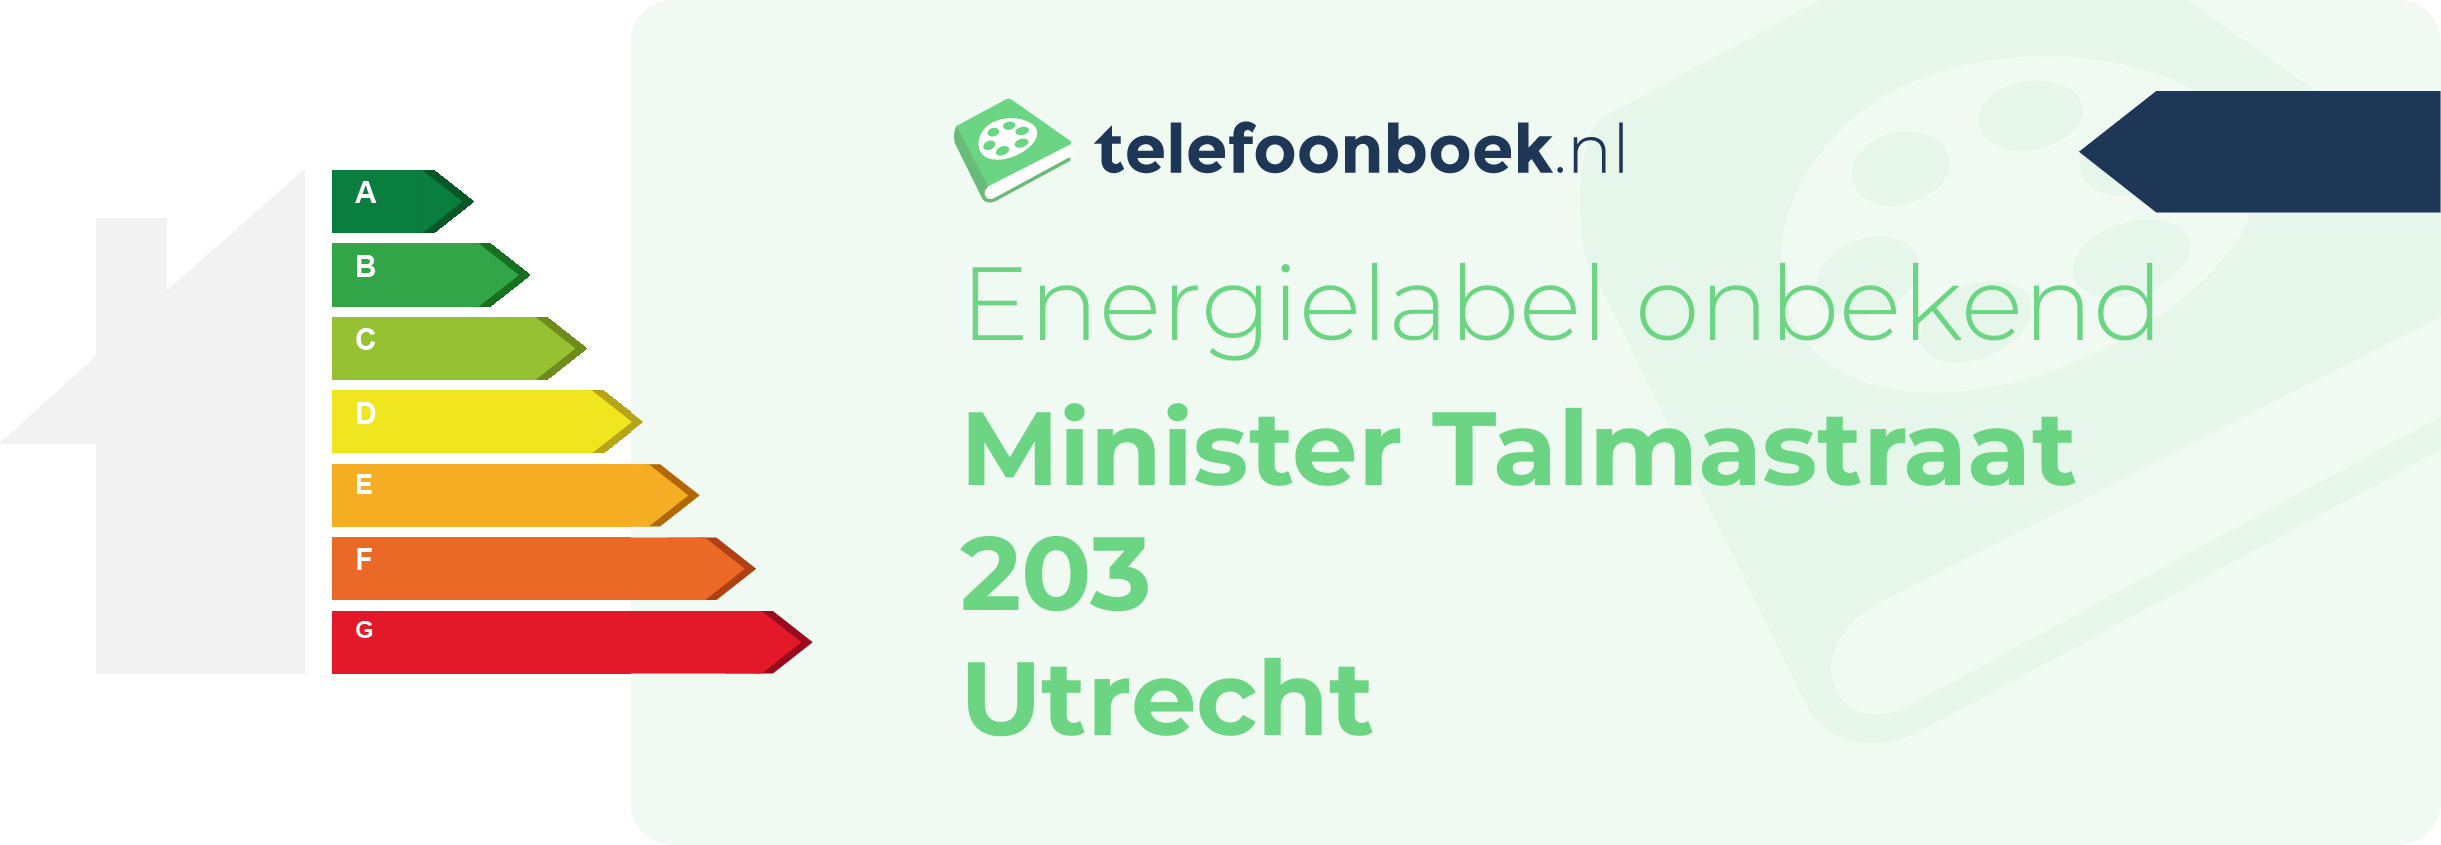 Energielabel Minister Talmastraat 203 Utrecht